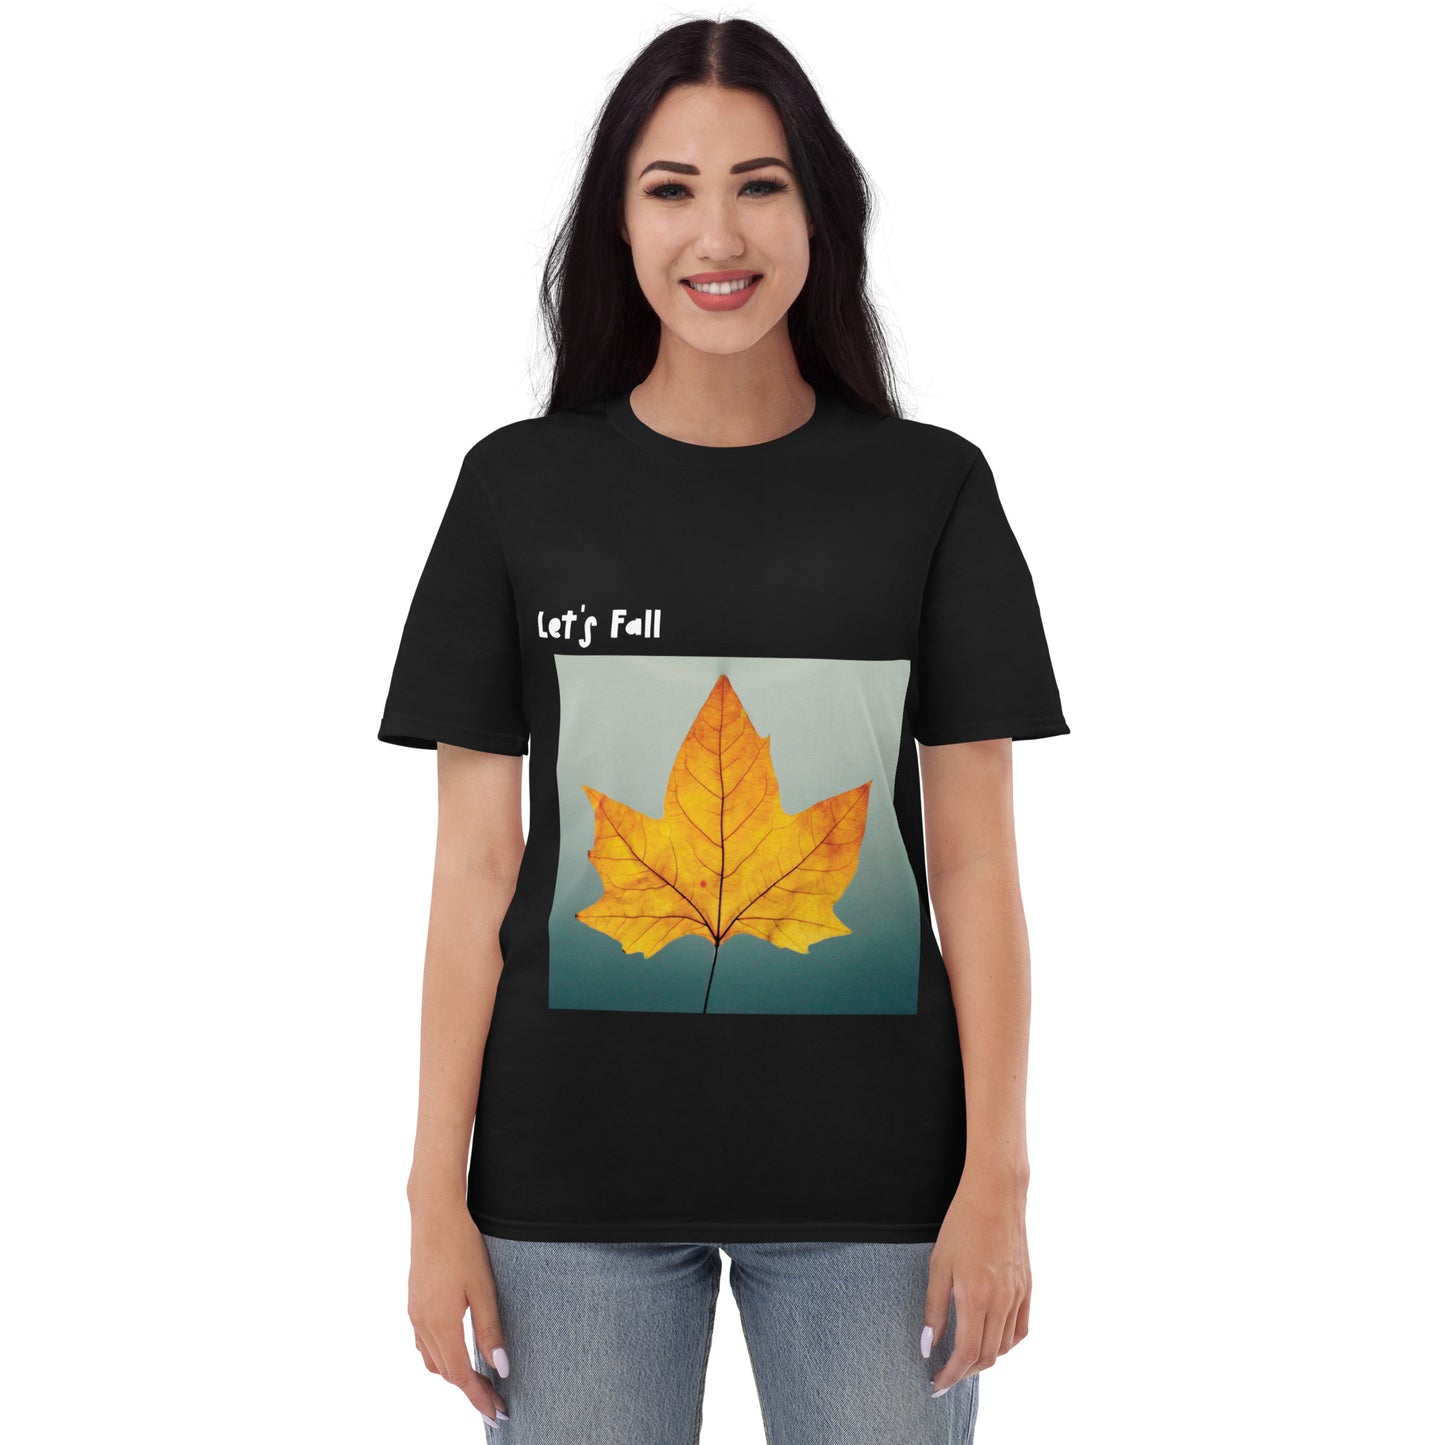 Embrace Autumn Vibes: Fall Leaves Unisex T-Shirt - Stylish Comfort for the Season!